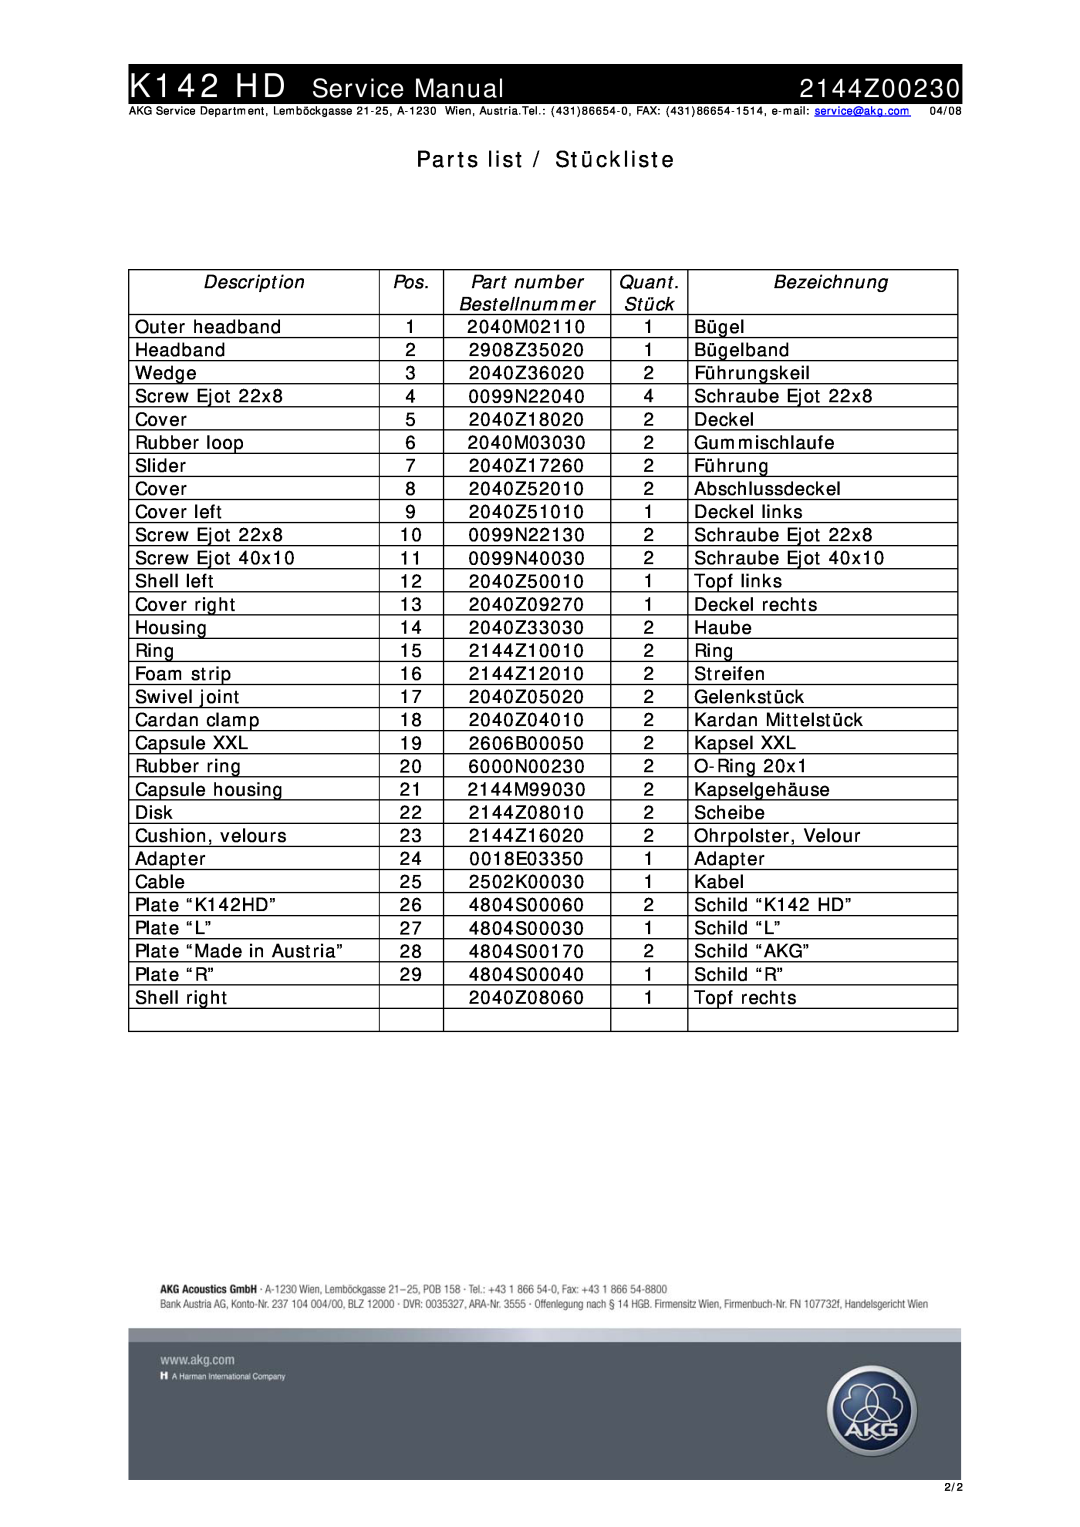 AKG Acoustics K142HD service manual 2144Z00230, Parts list / Stückliste 